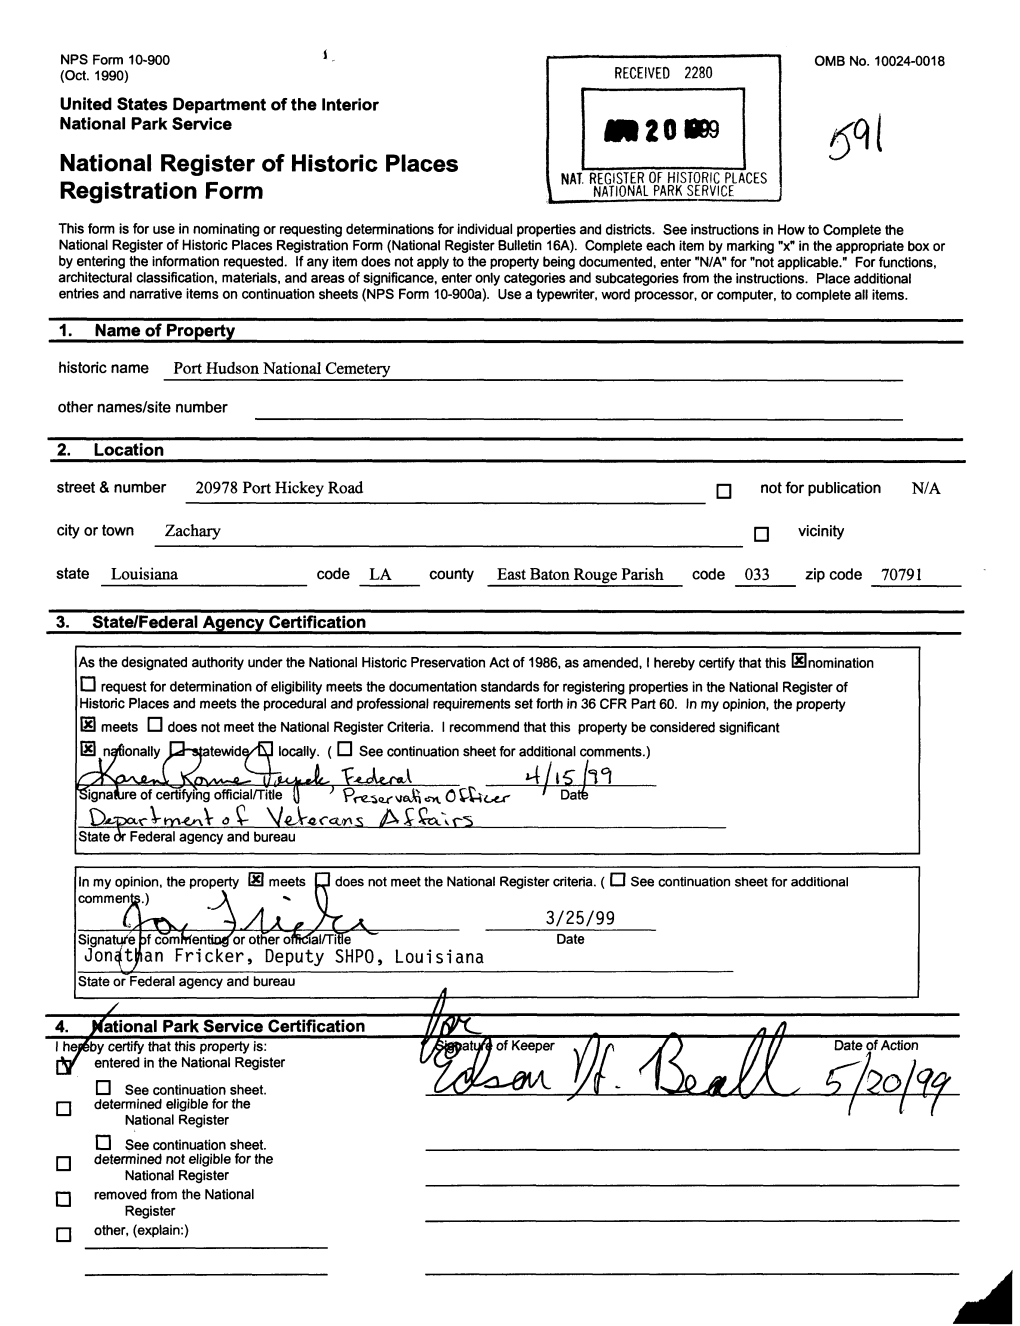 '"A/Urj^- 3/25/" Signature Bf Comfrfentidgl'hfentickj'or Other Official/Title Date Jona'trtan Fricker, Deputy SHPO, Louisiana State Or Federal Agency and Bureau ± 4